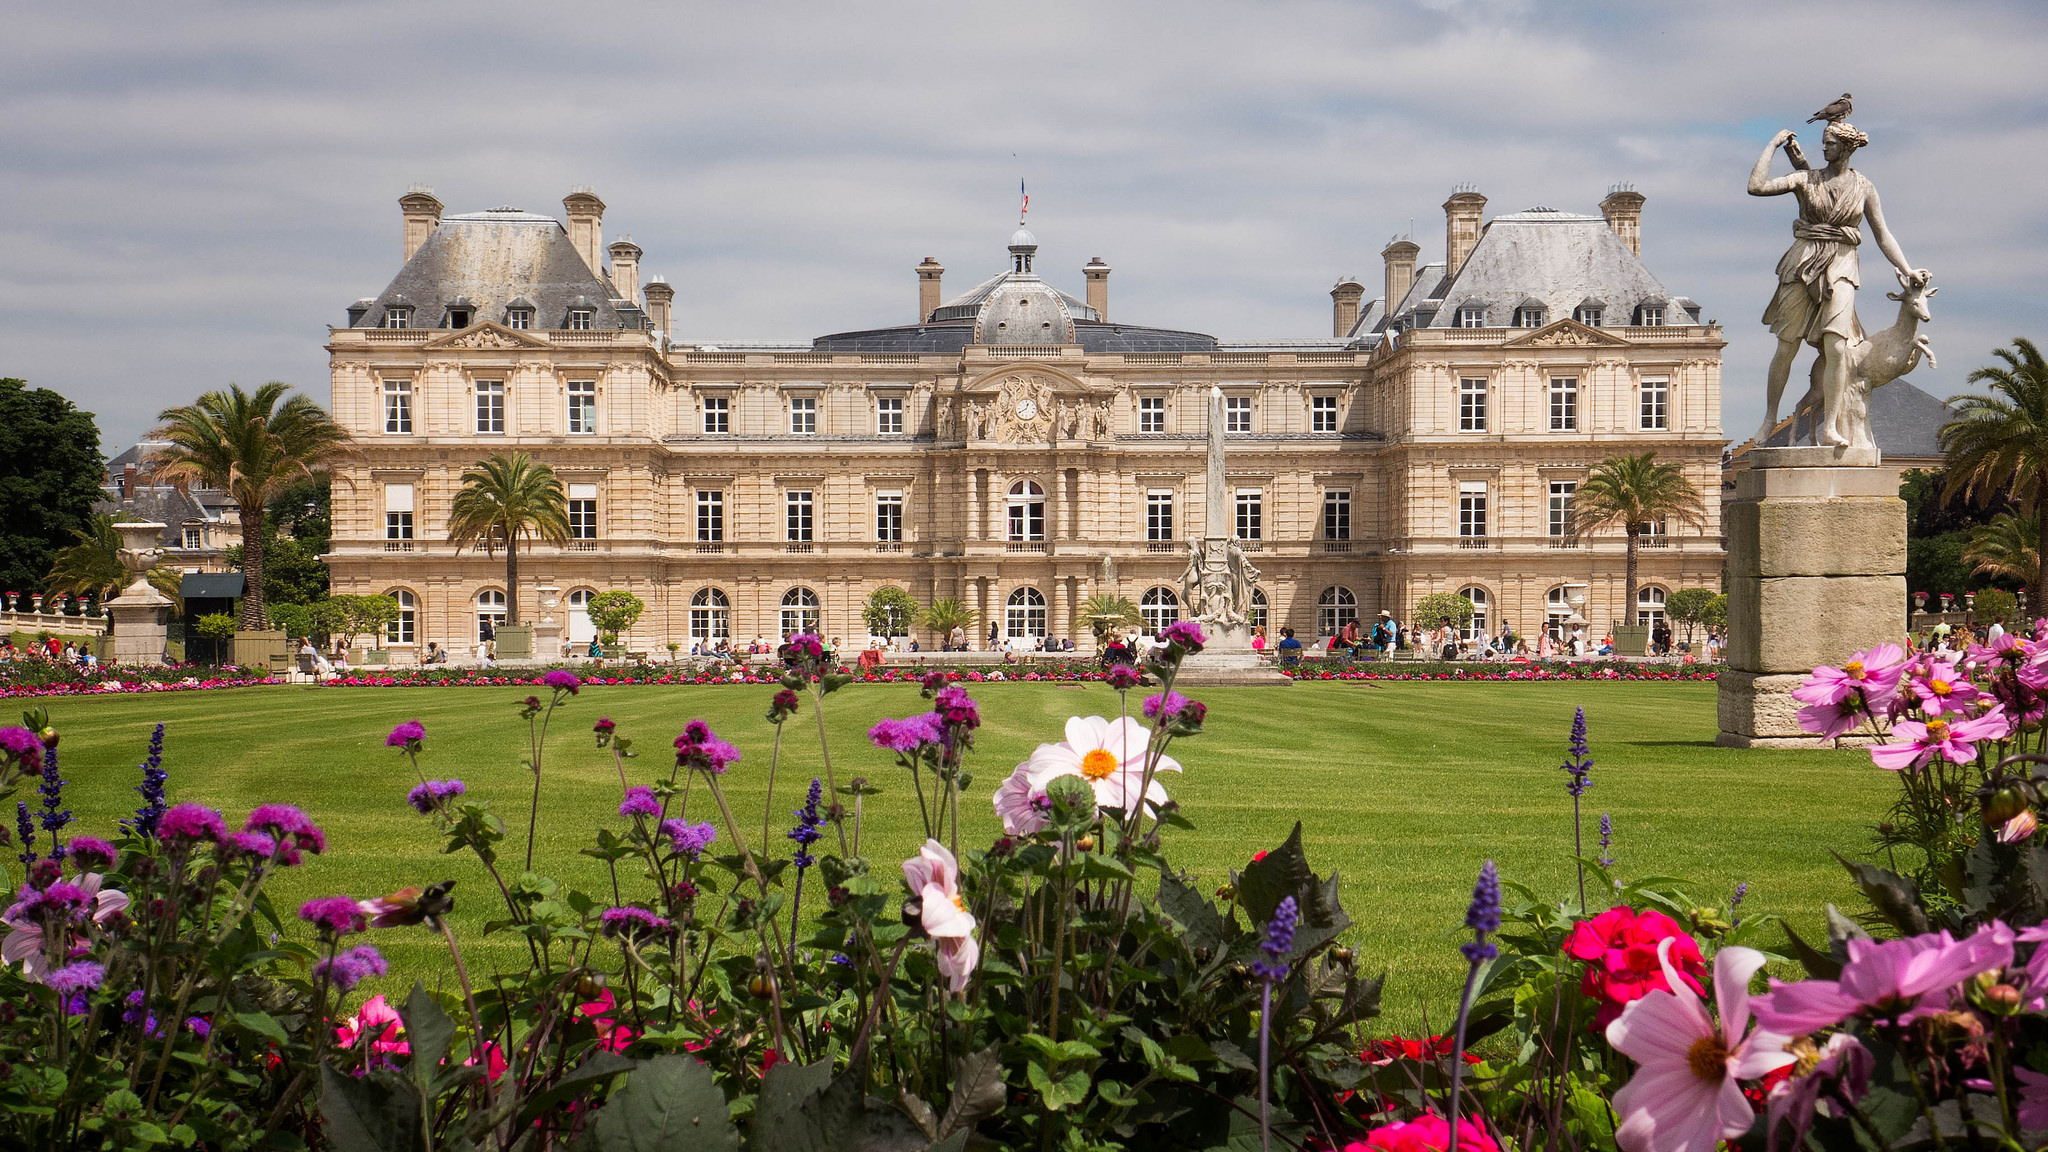 Luxembourg Palace, Paris France by Joe deSousa